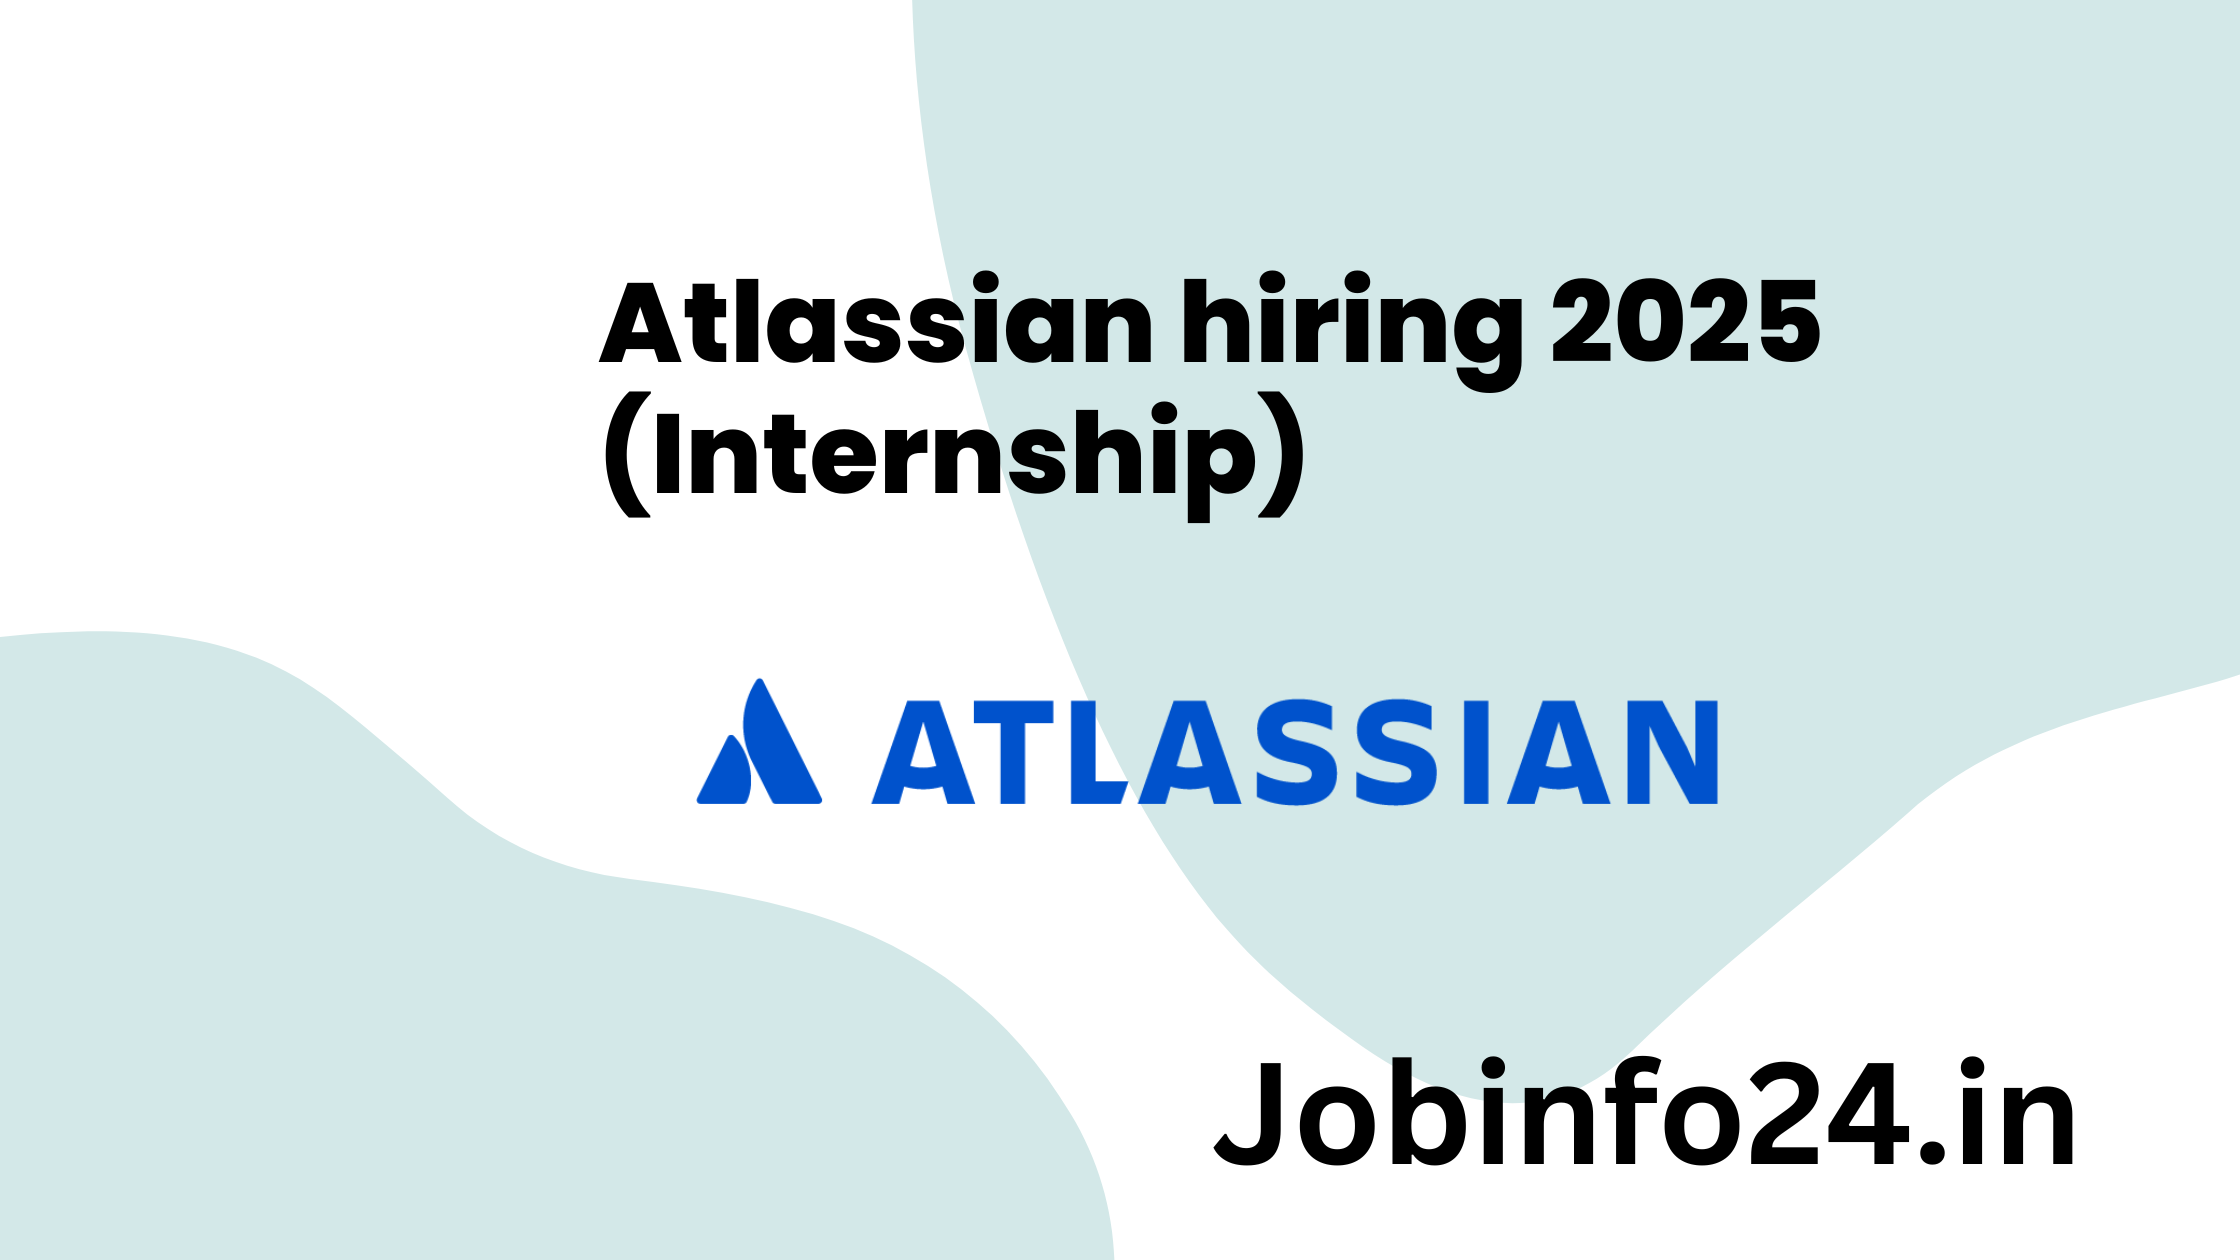 Atlassian hiring 2025 (Internship)